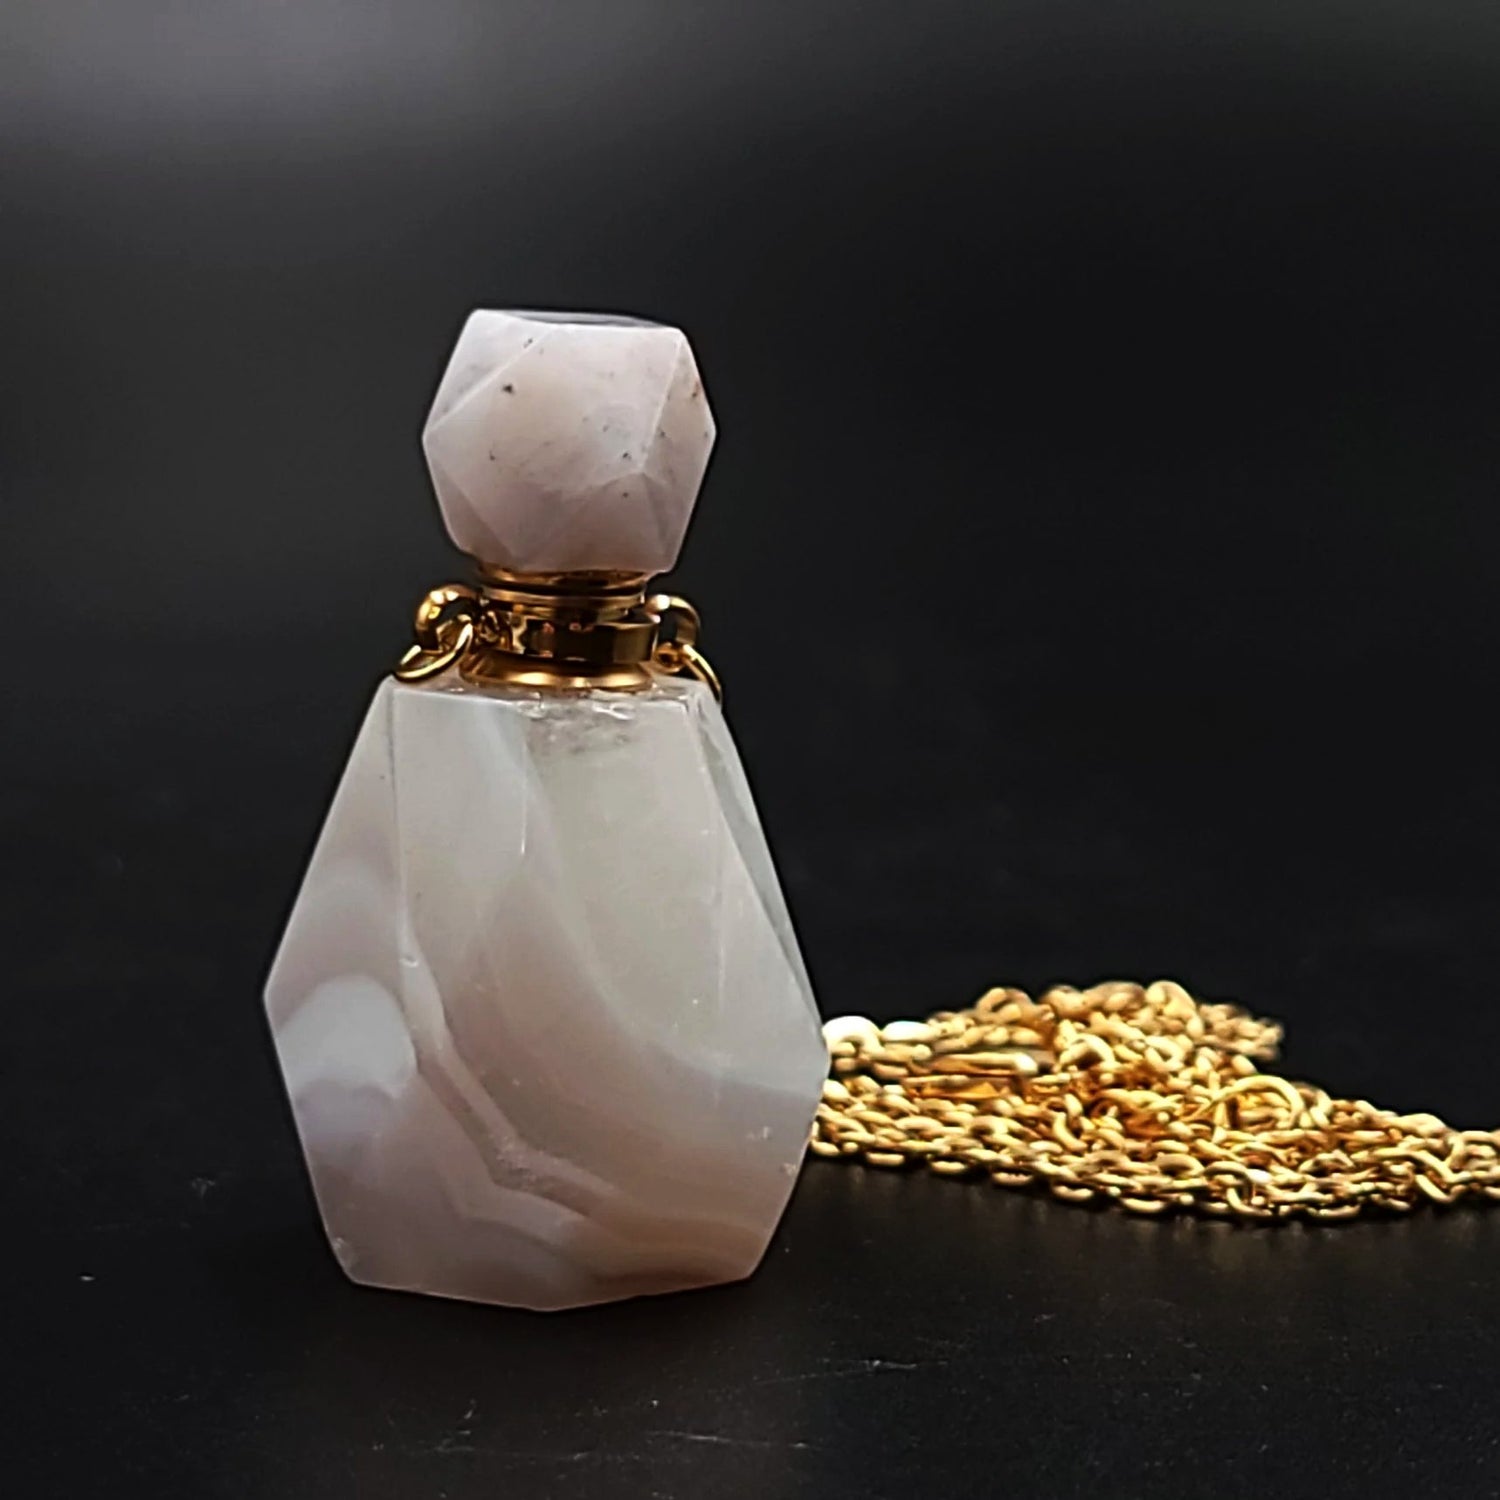 White Agate Bottle Pendant Necklace Sacred Geometry Holder Perfume Oils Incense Ashes - Elevated Metaphysical